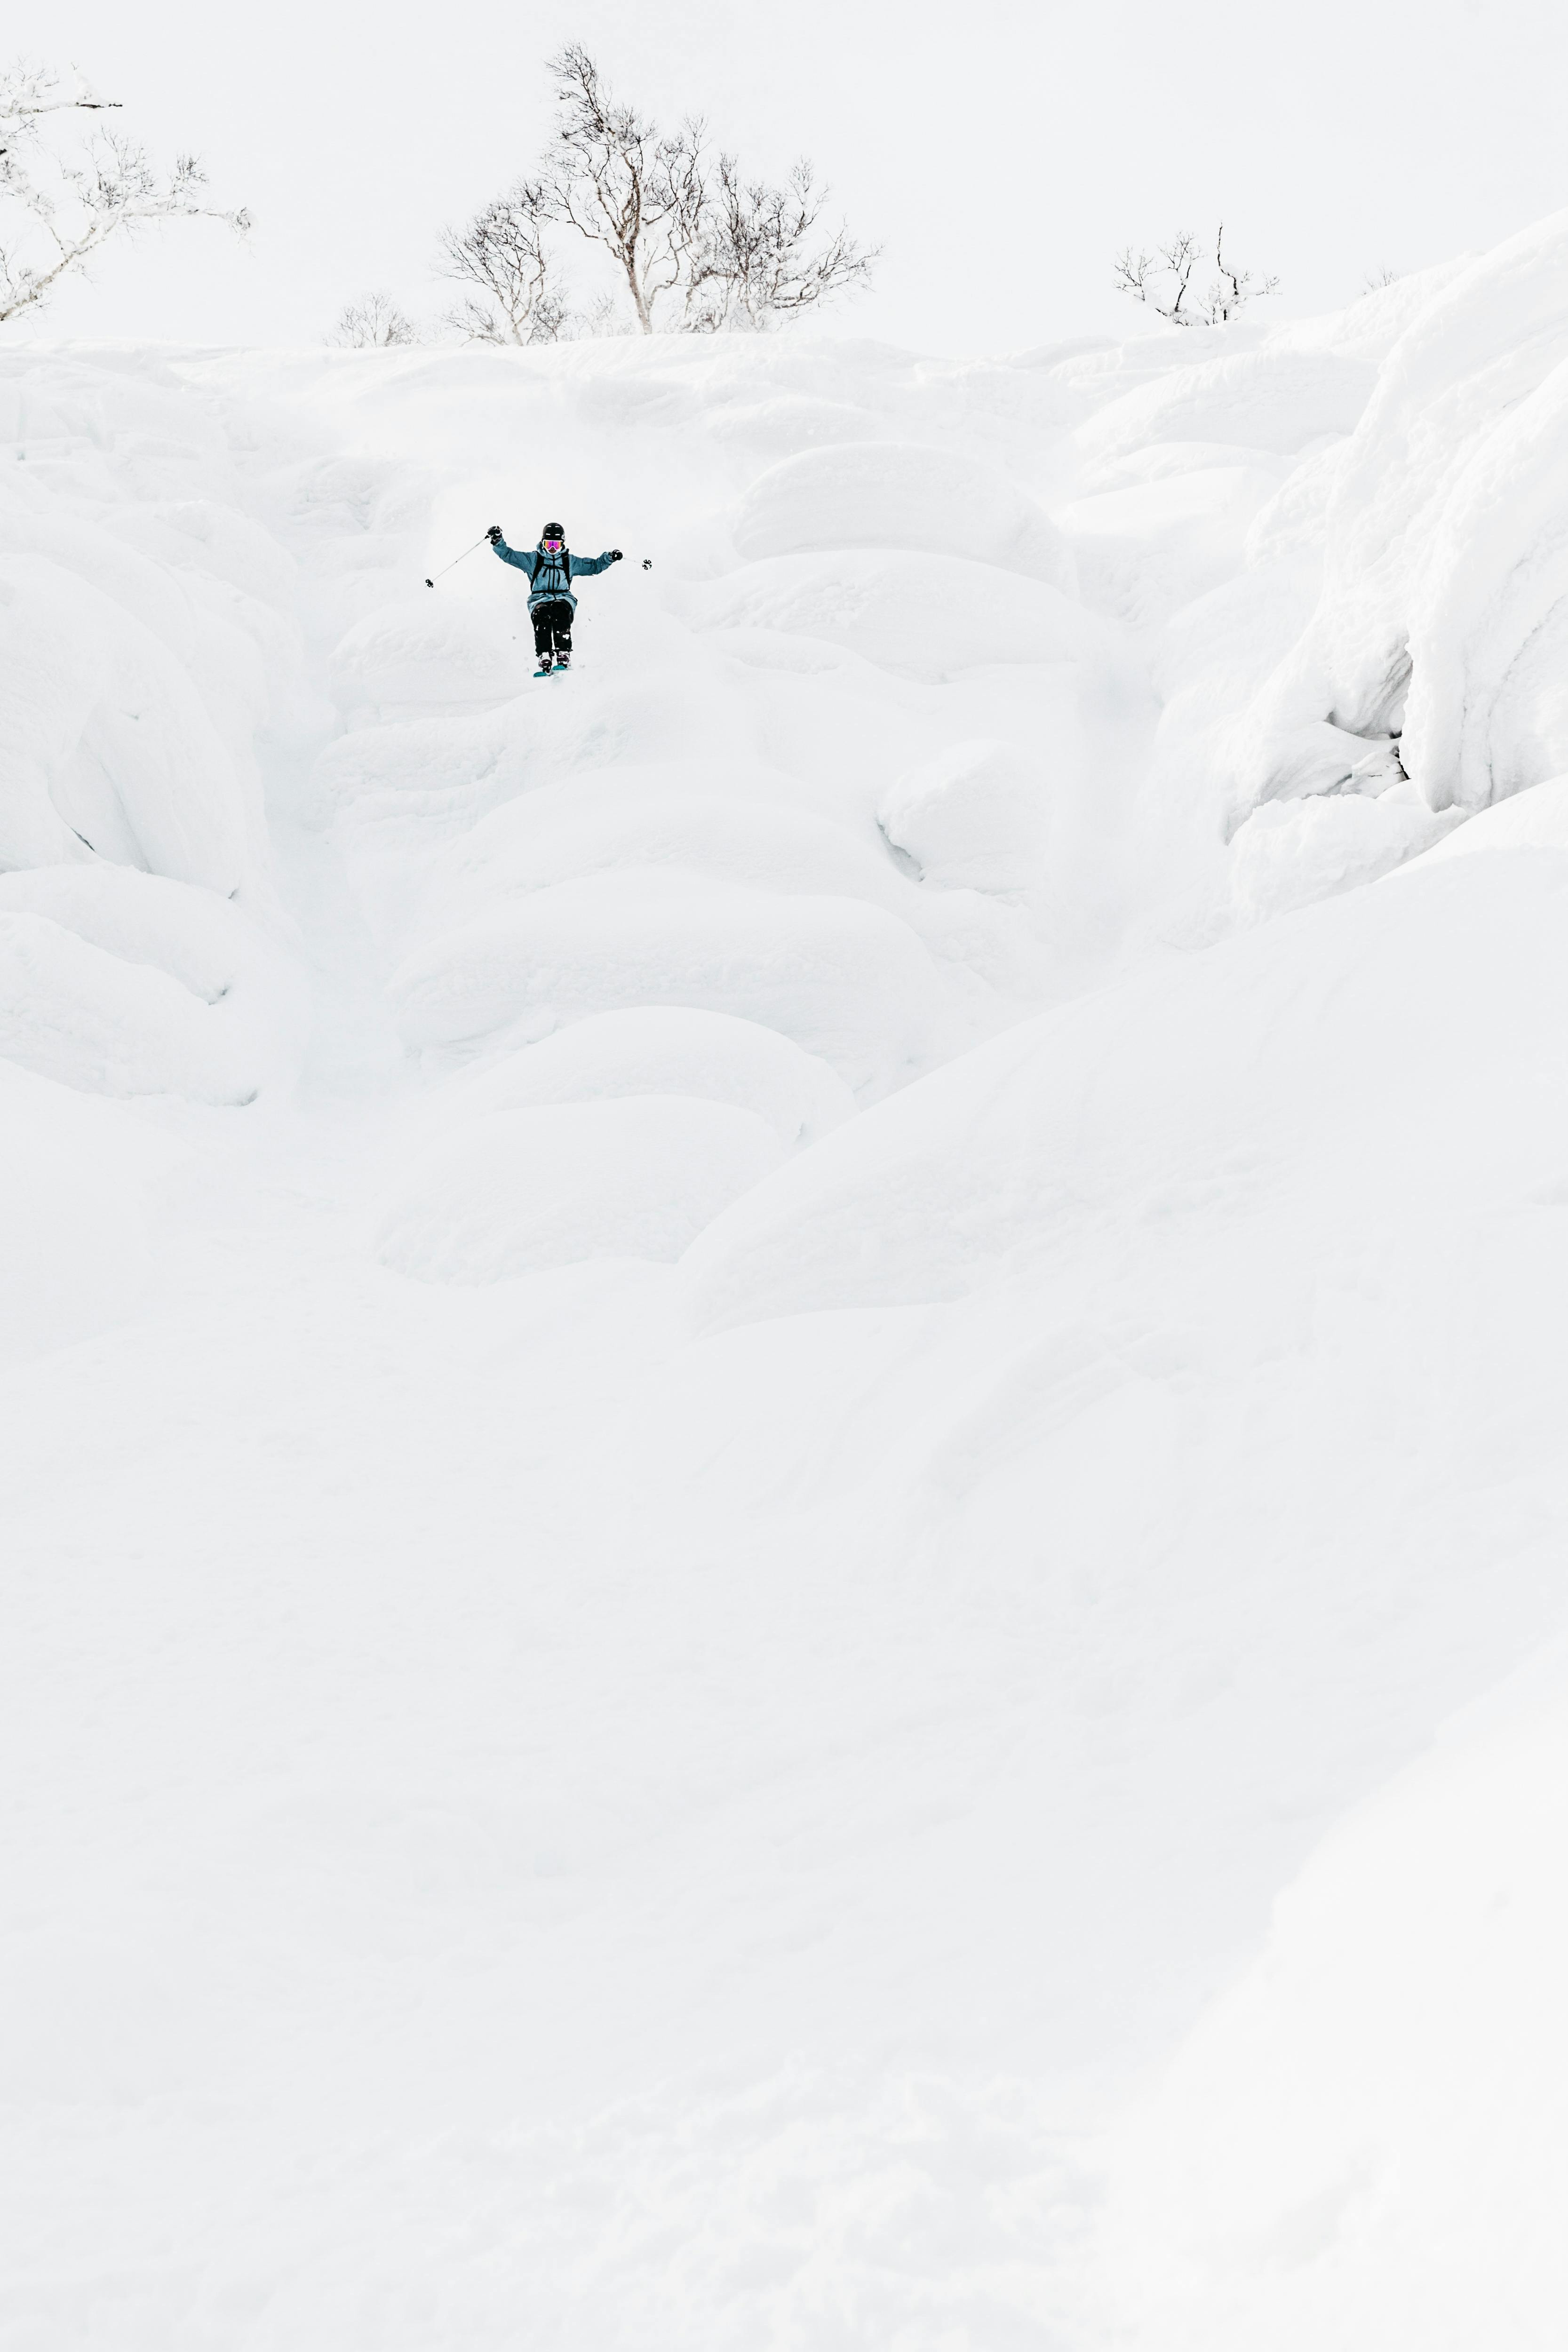 Skier jumping into the fresh powder snow of Niseko